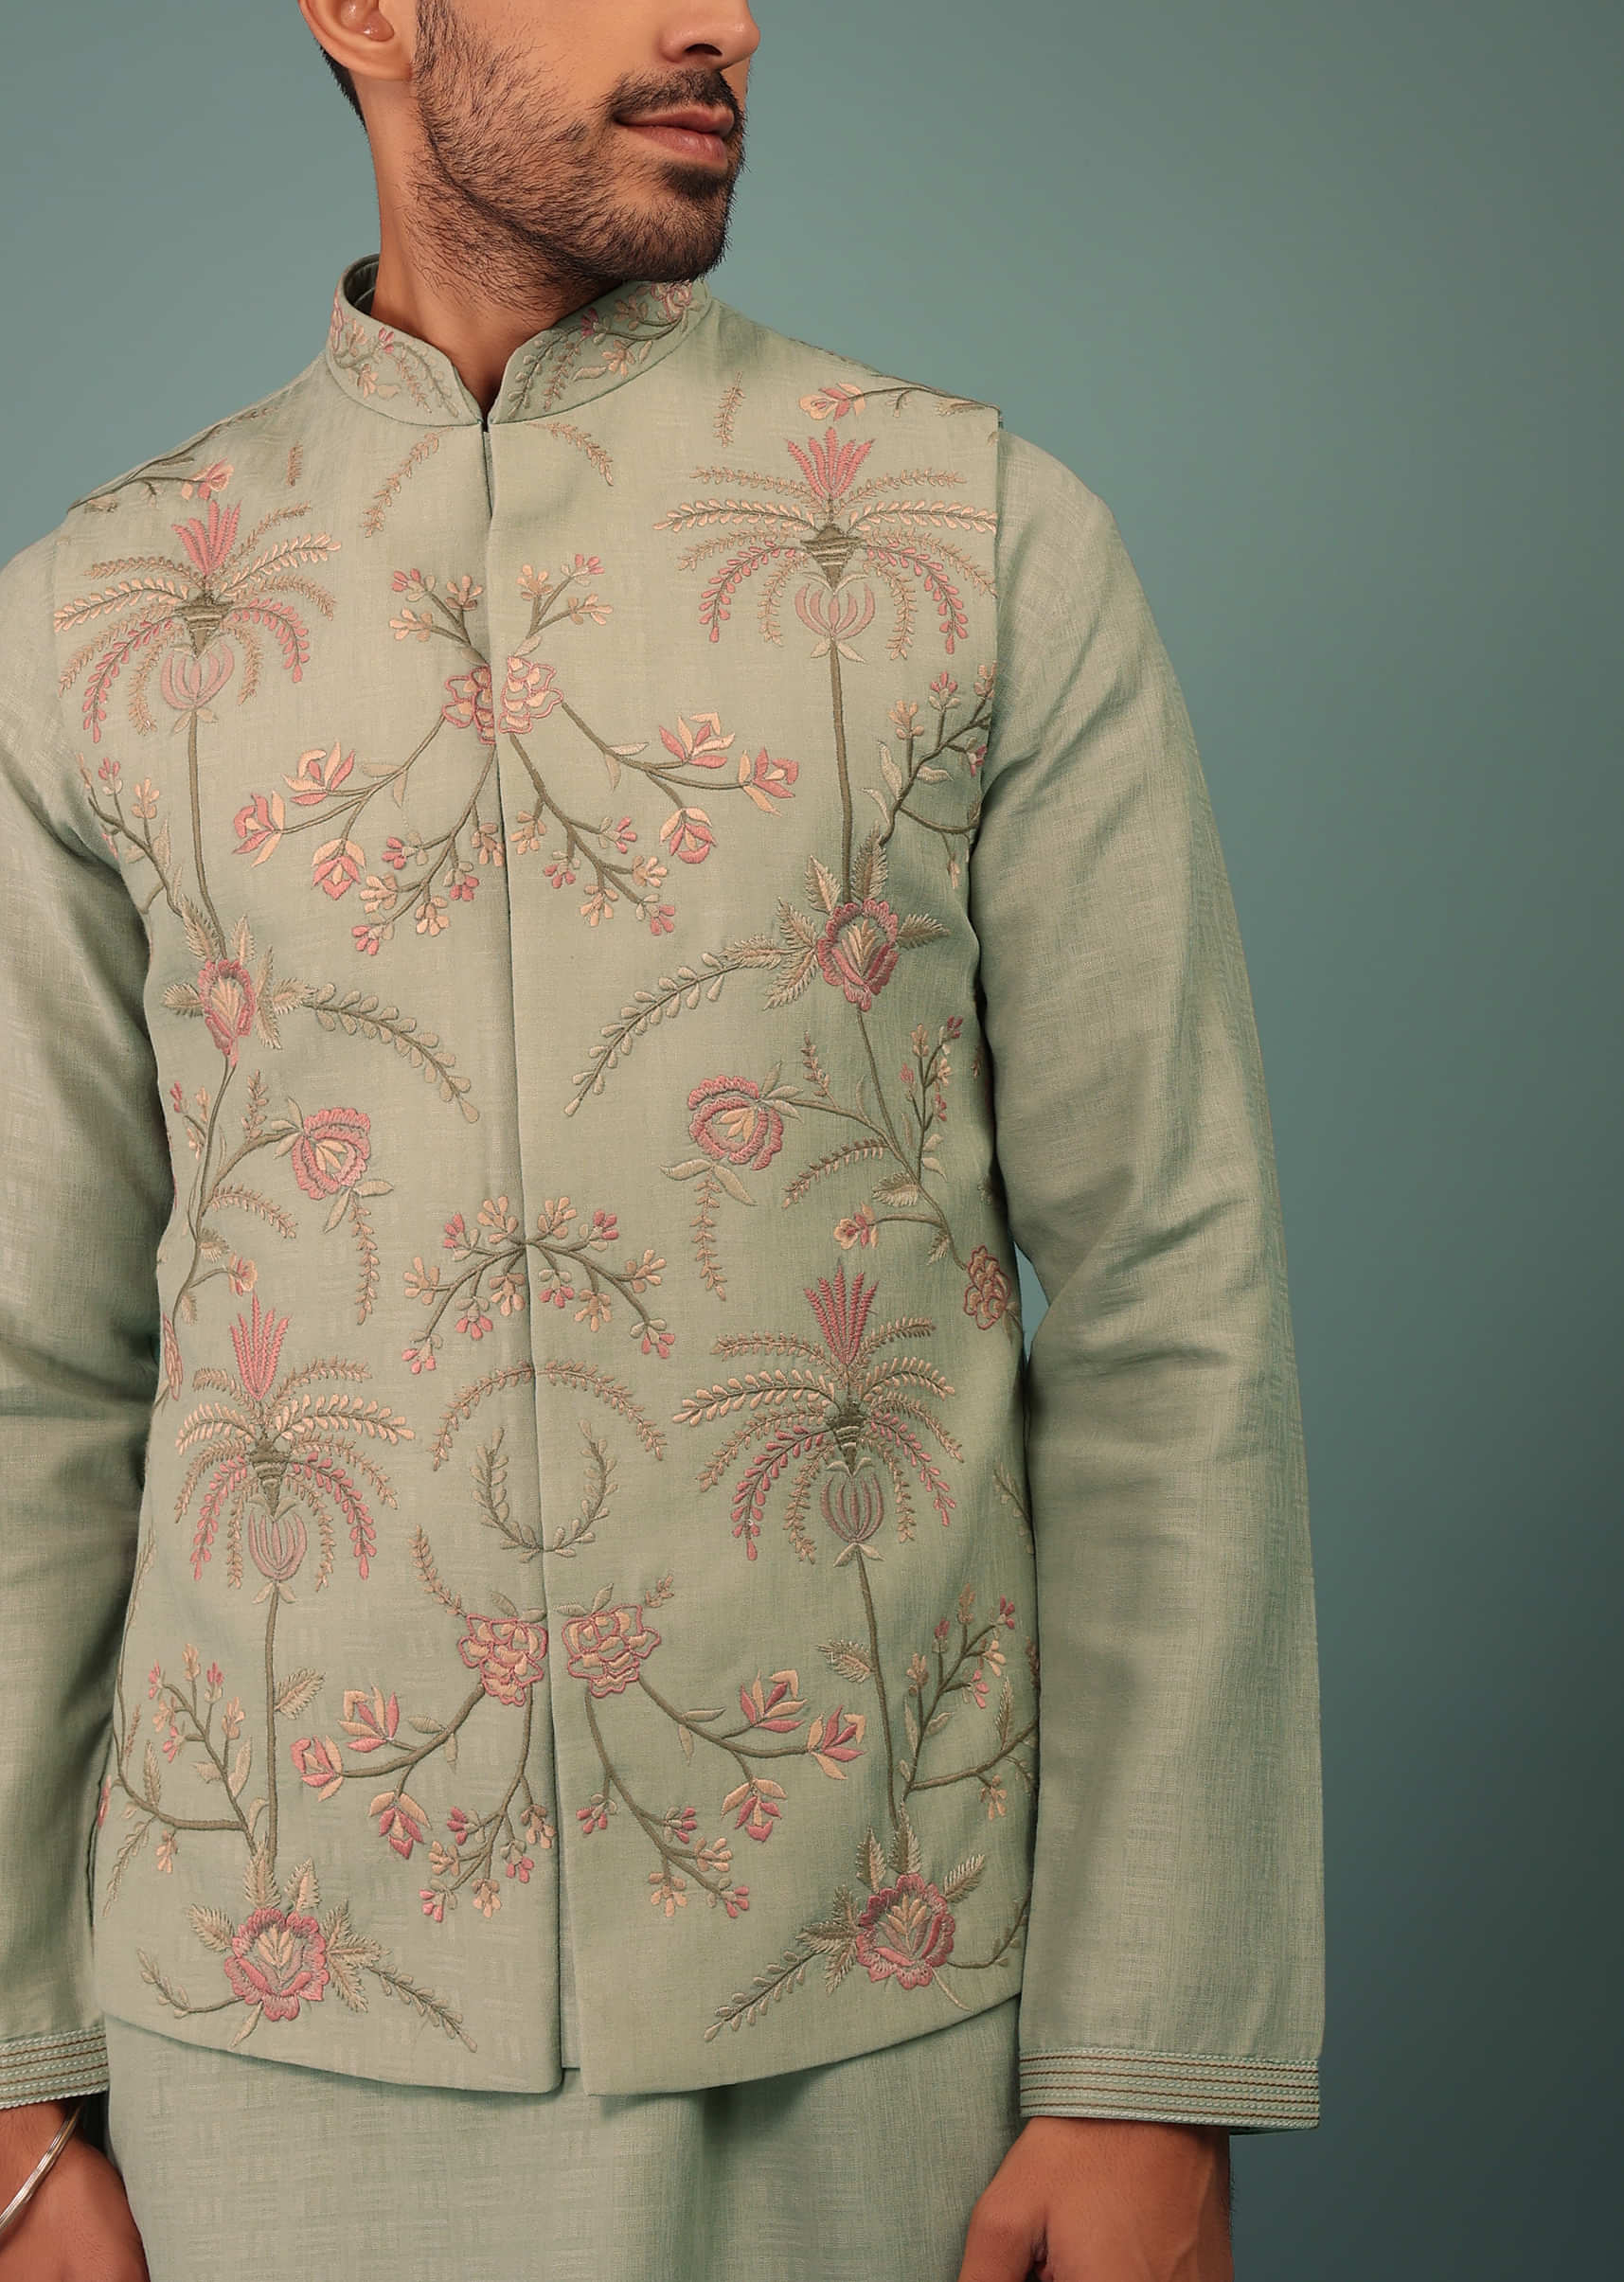 Gray 40                  EU discount 83% WOMEN FASHION Jackets Vest Embroidery Springfield vest 